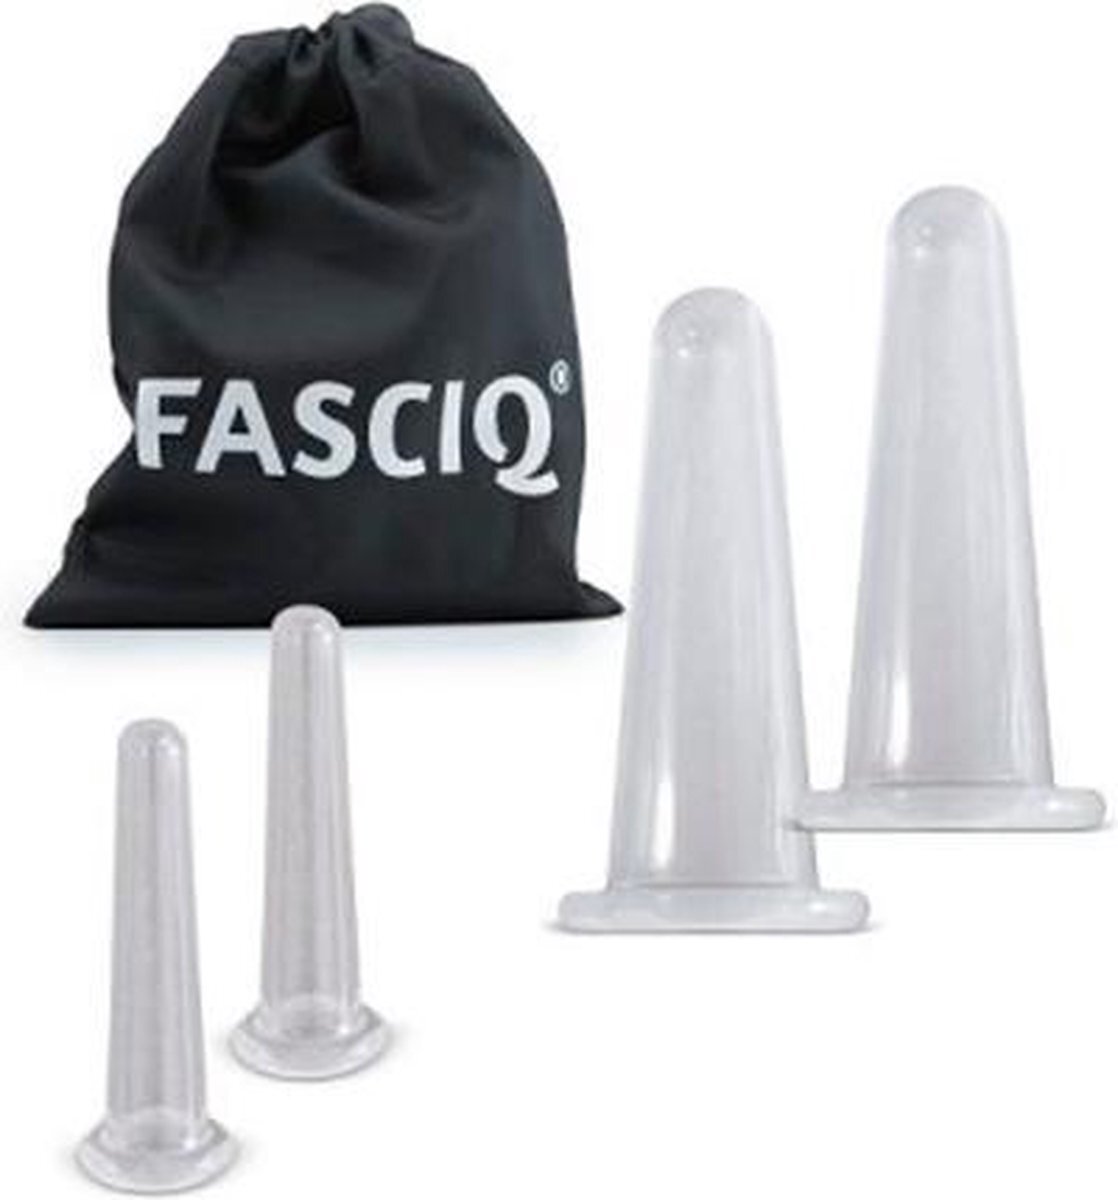 Fasciq - Facial cupping set - Cupping set massage gezicht - 4 stuks